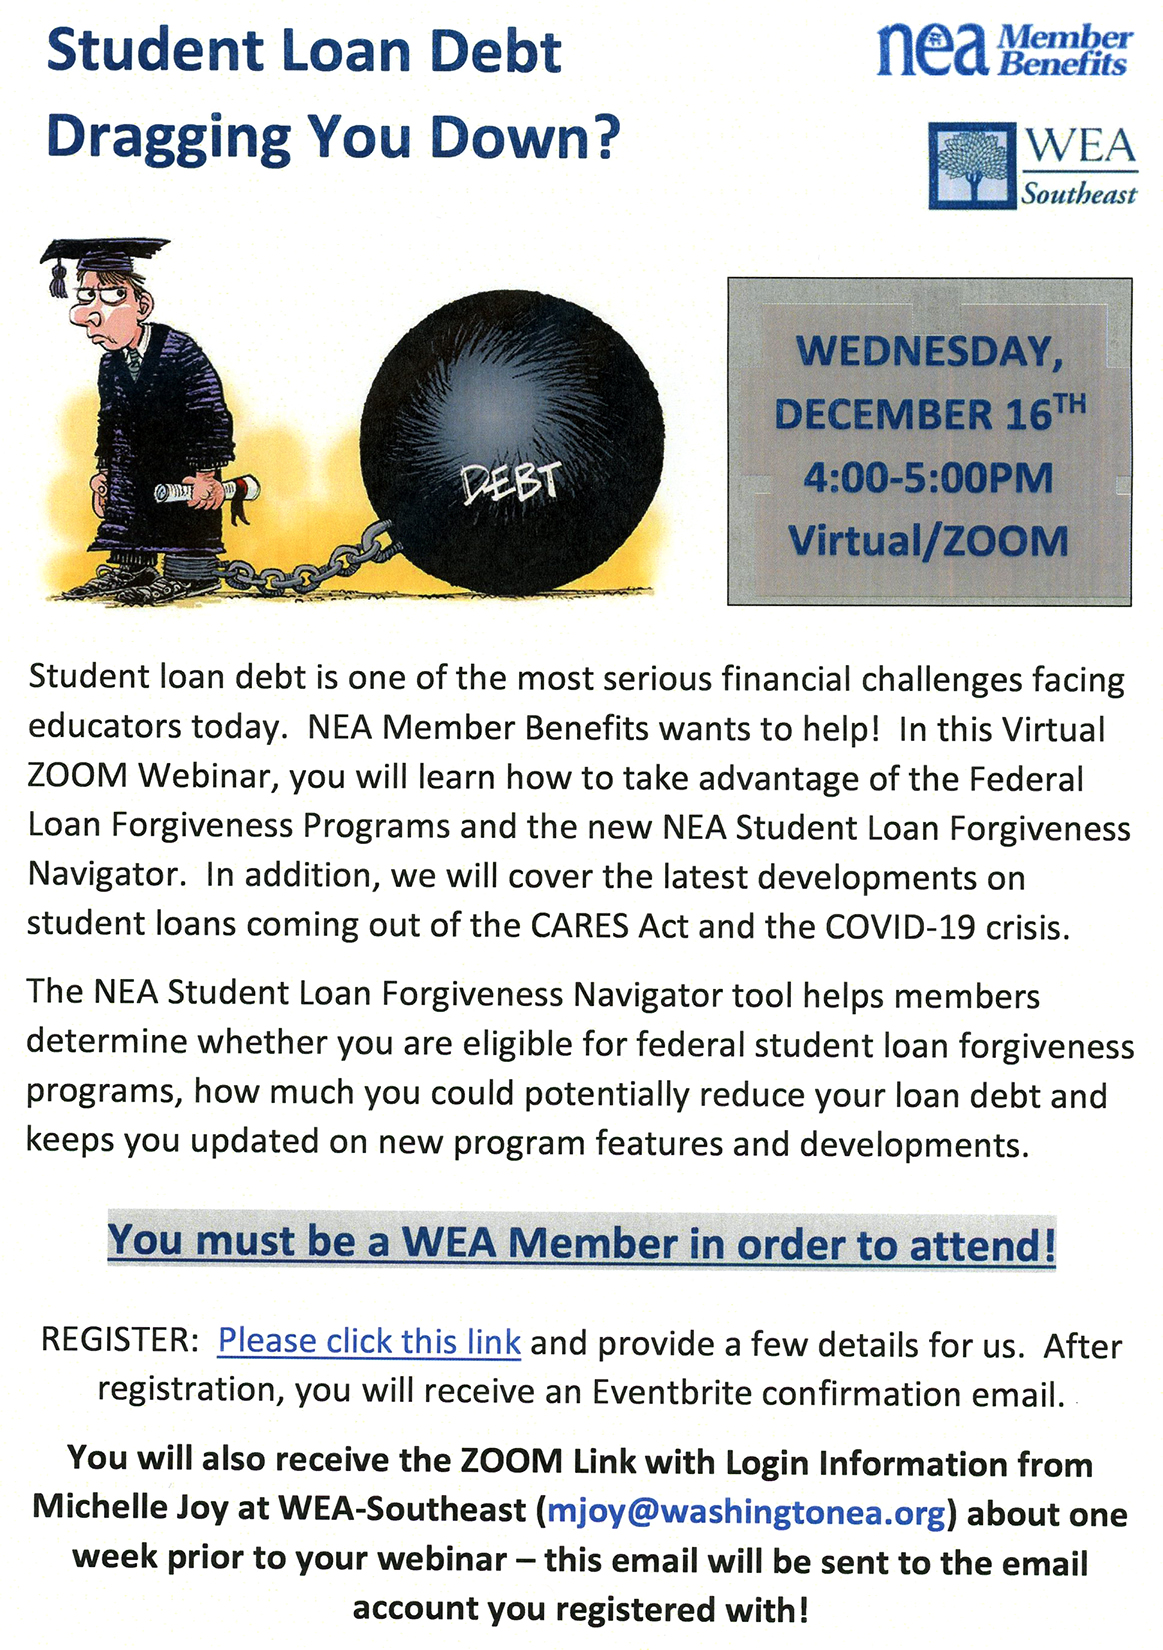 Student Loan Seminar